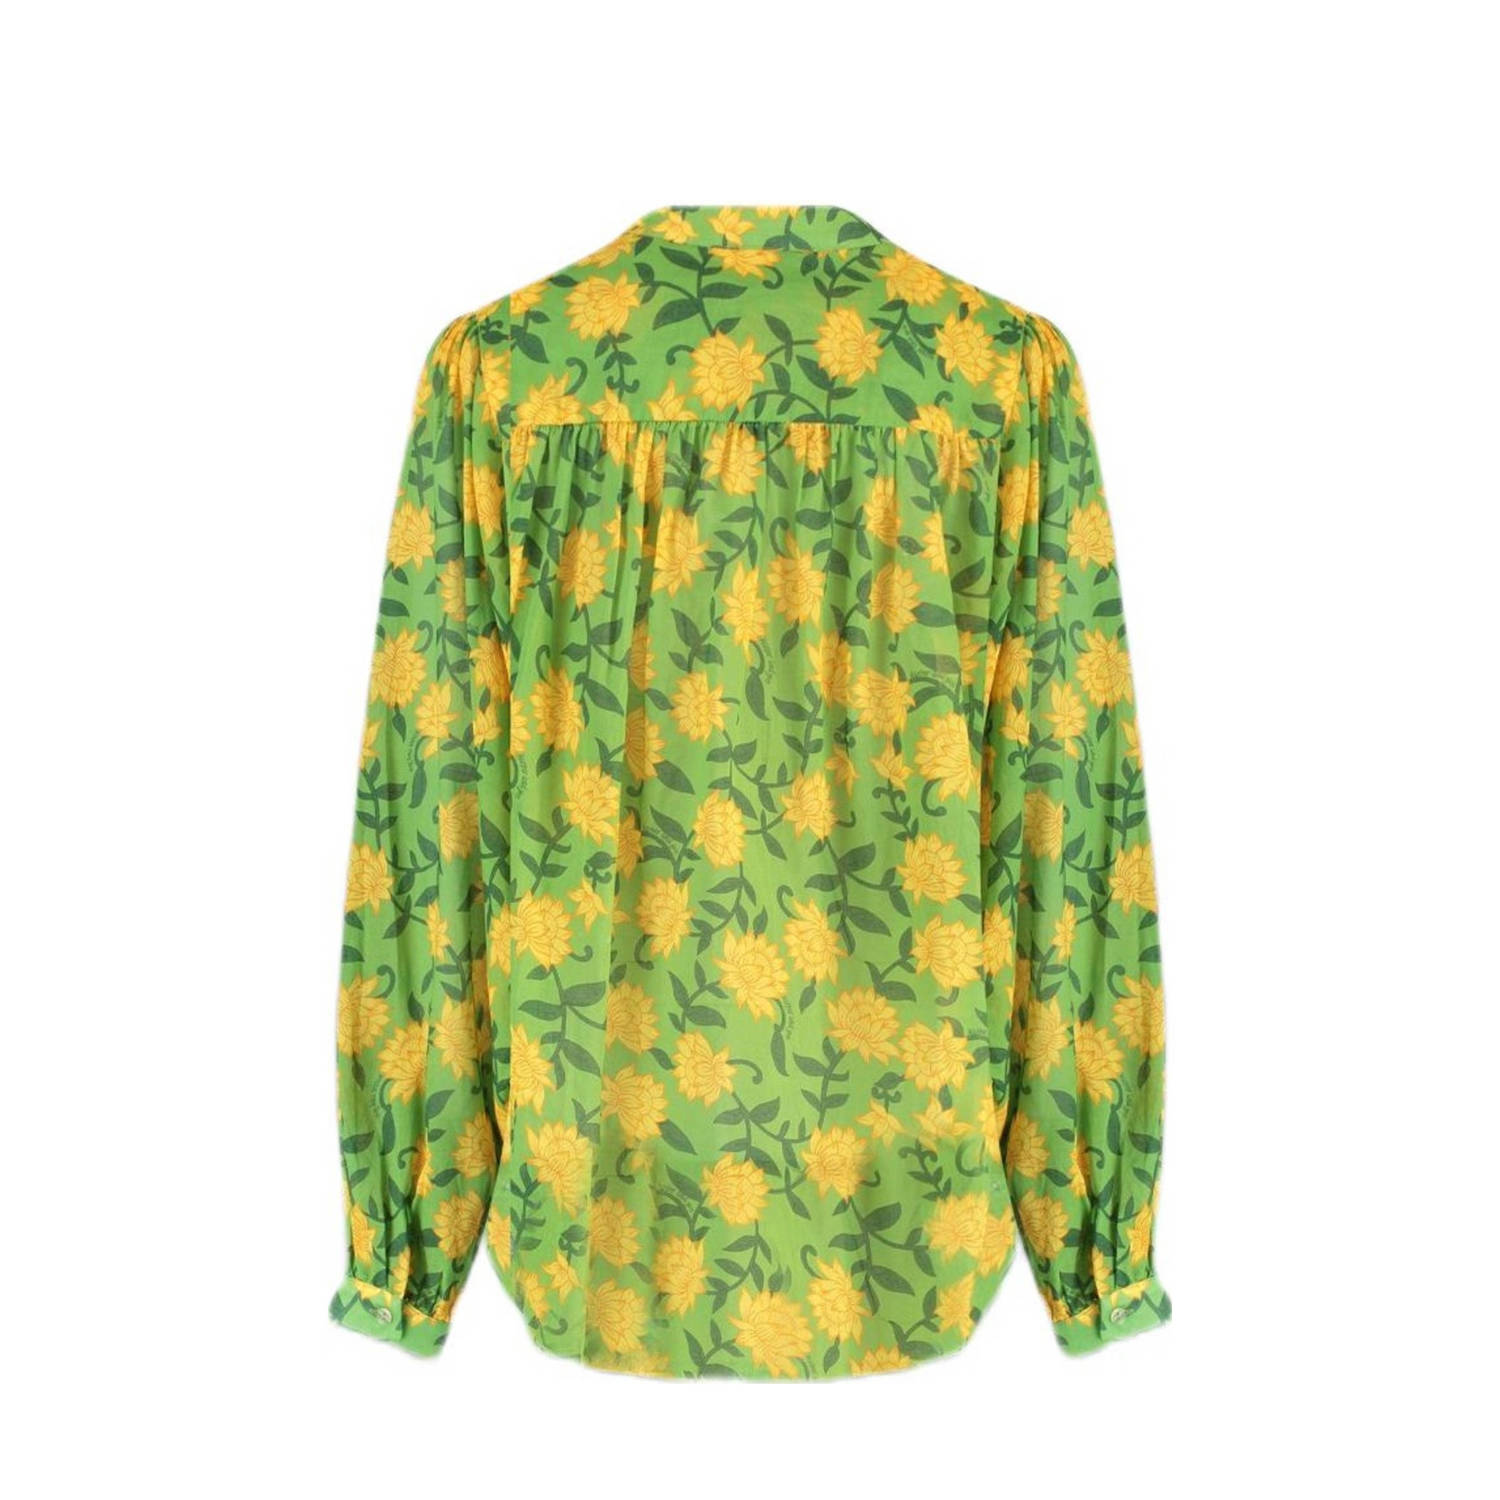 HARPER & YVE blouse met bloemenprint groen geel